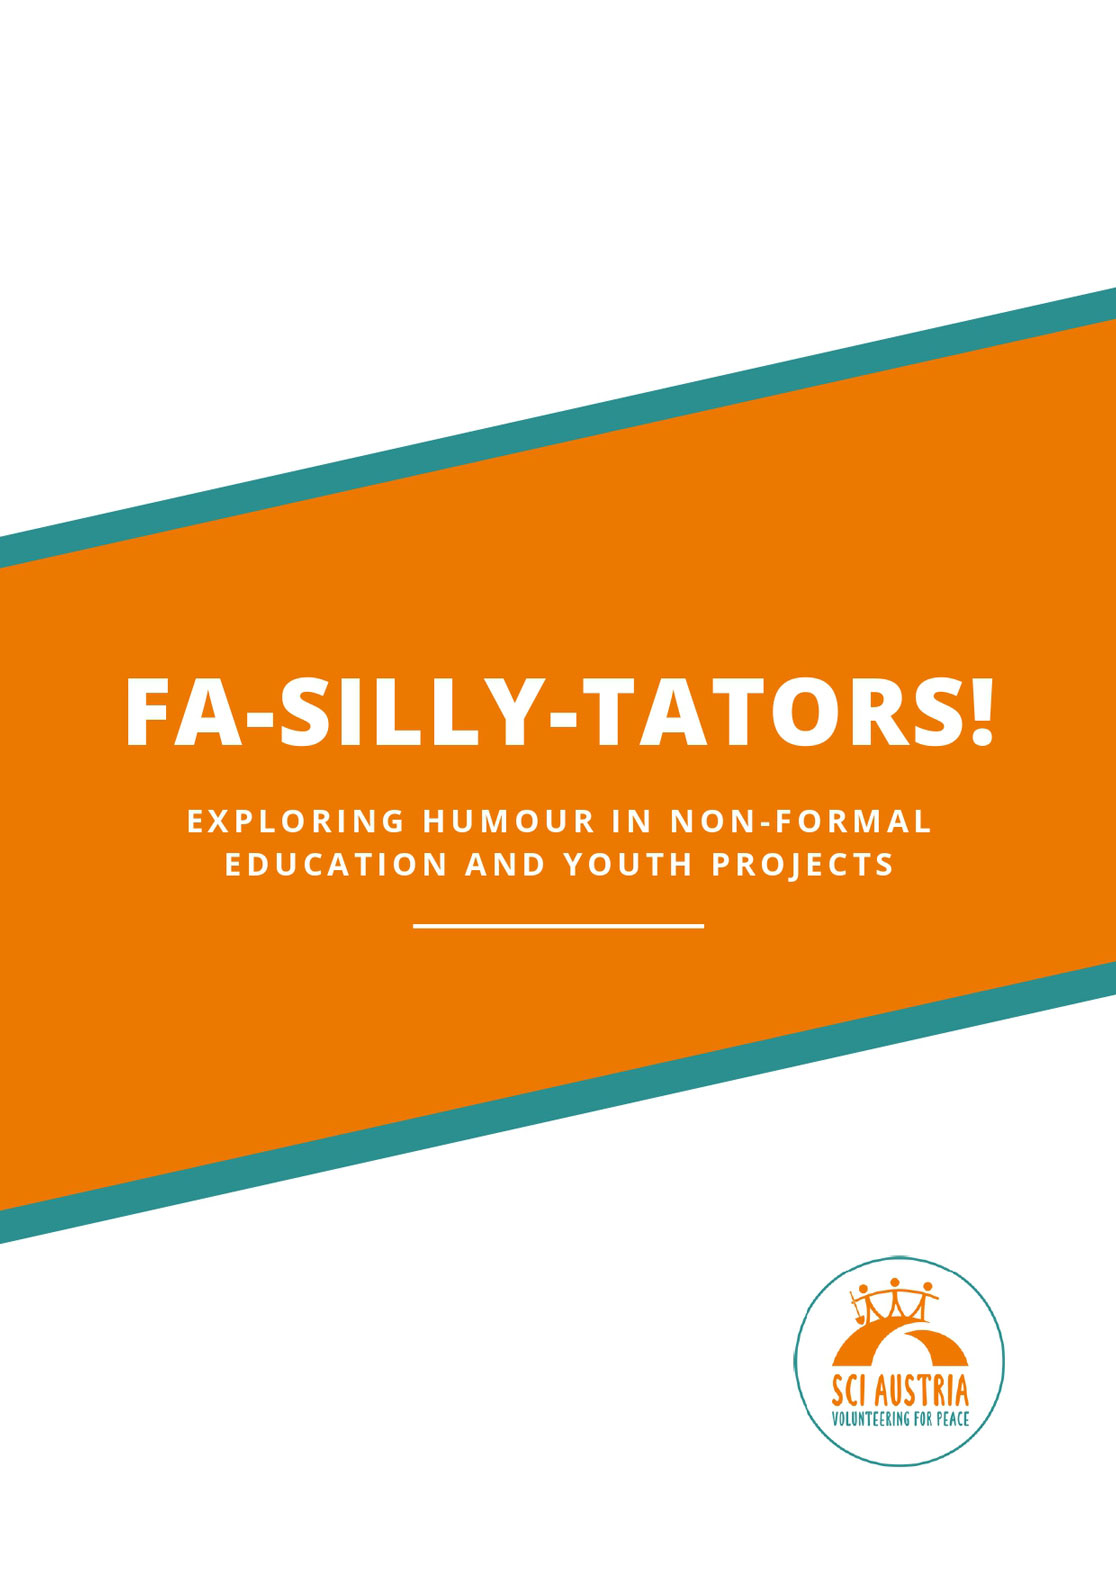 FA-SILLY-TATORS toolkit